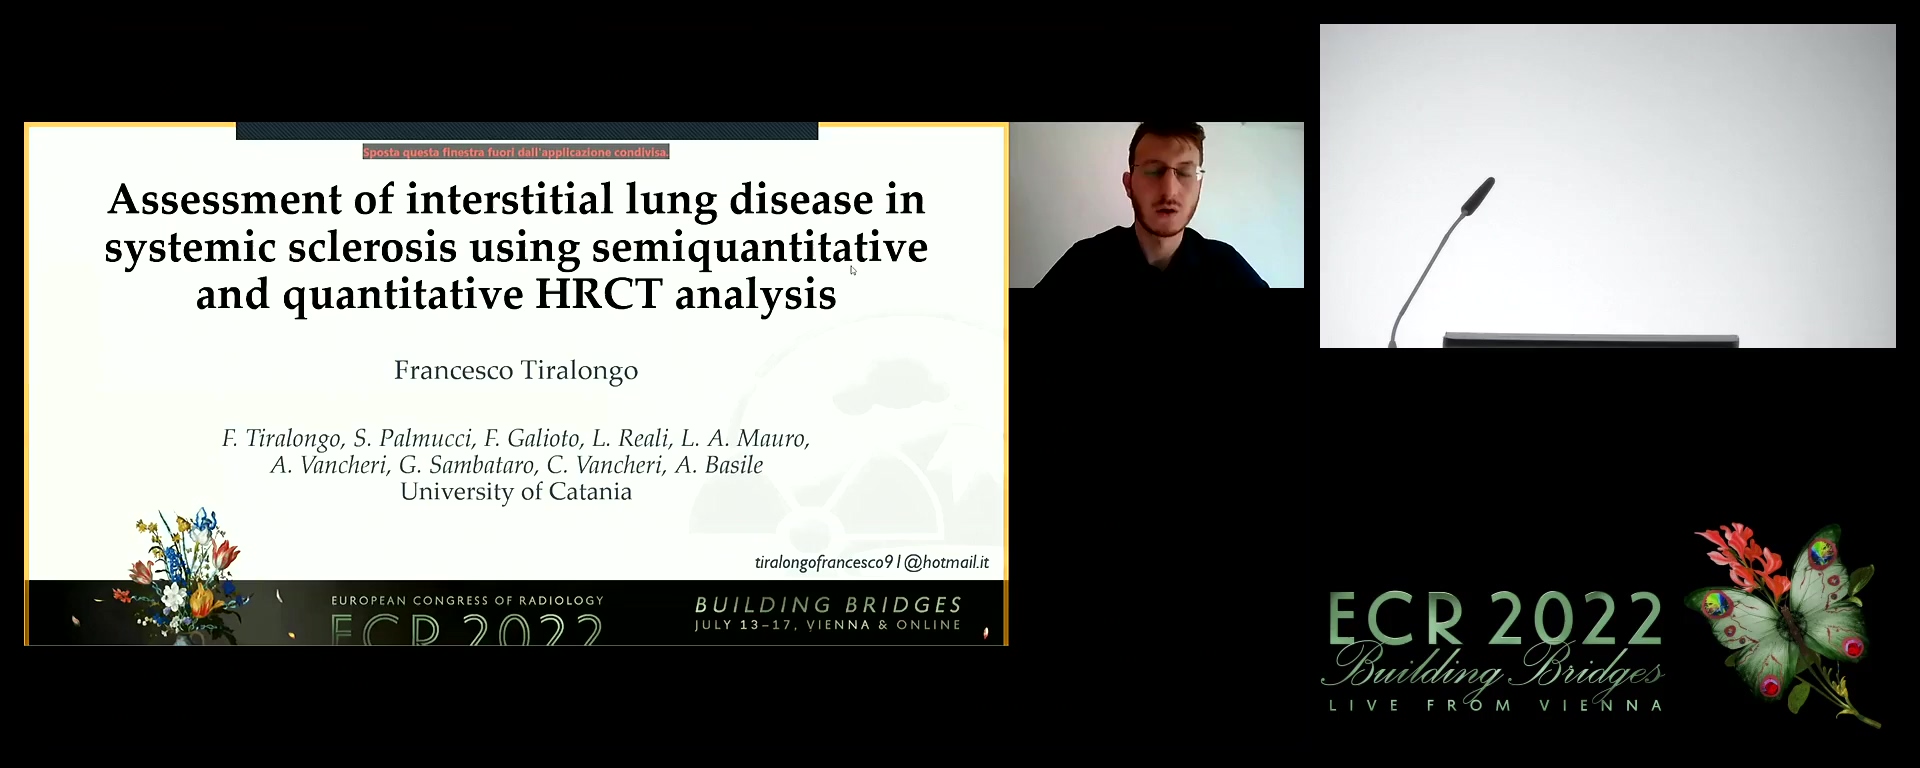 Assessment of interstitial lung disease in systemic sclerosis using semiquantitative and quantitative HRCT analysis - Francesco Tiralongo, Catania / IT